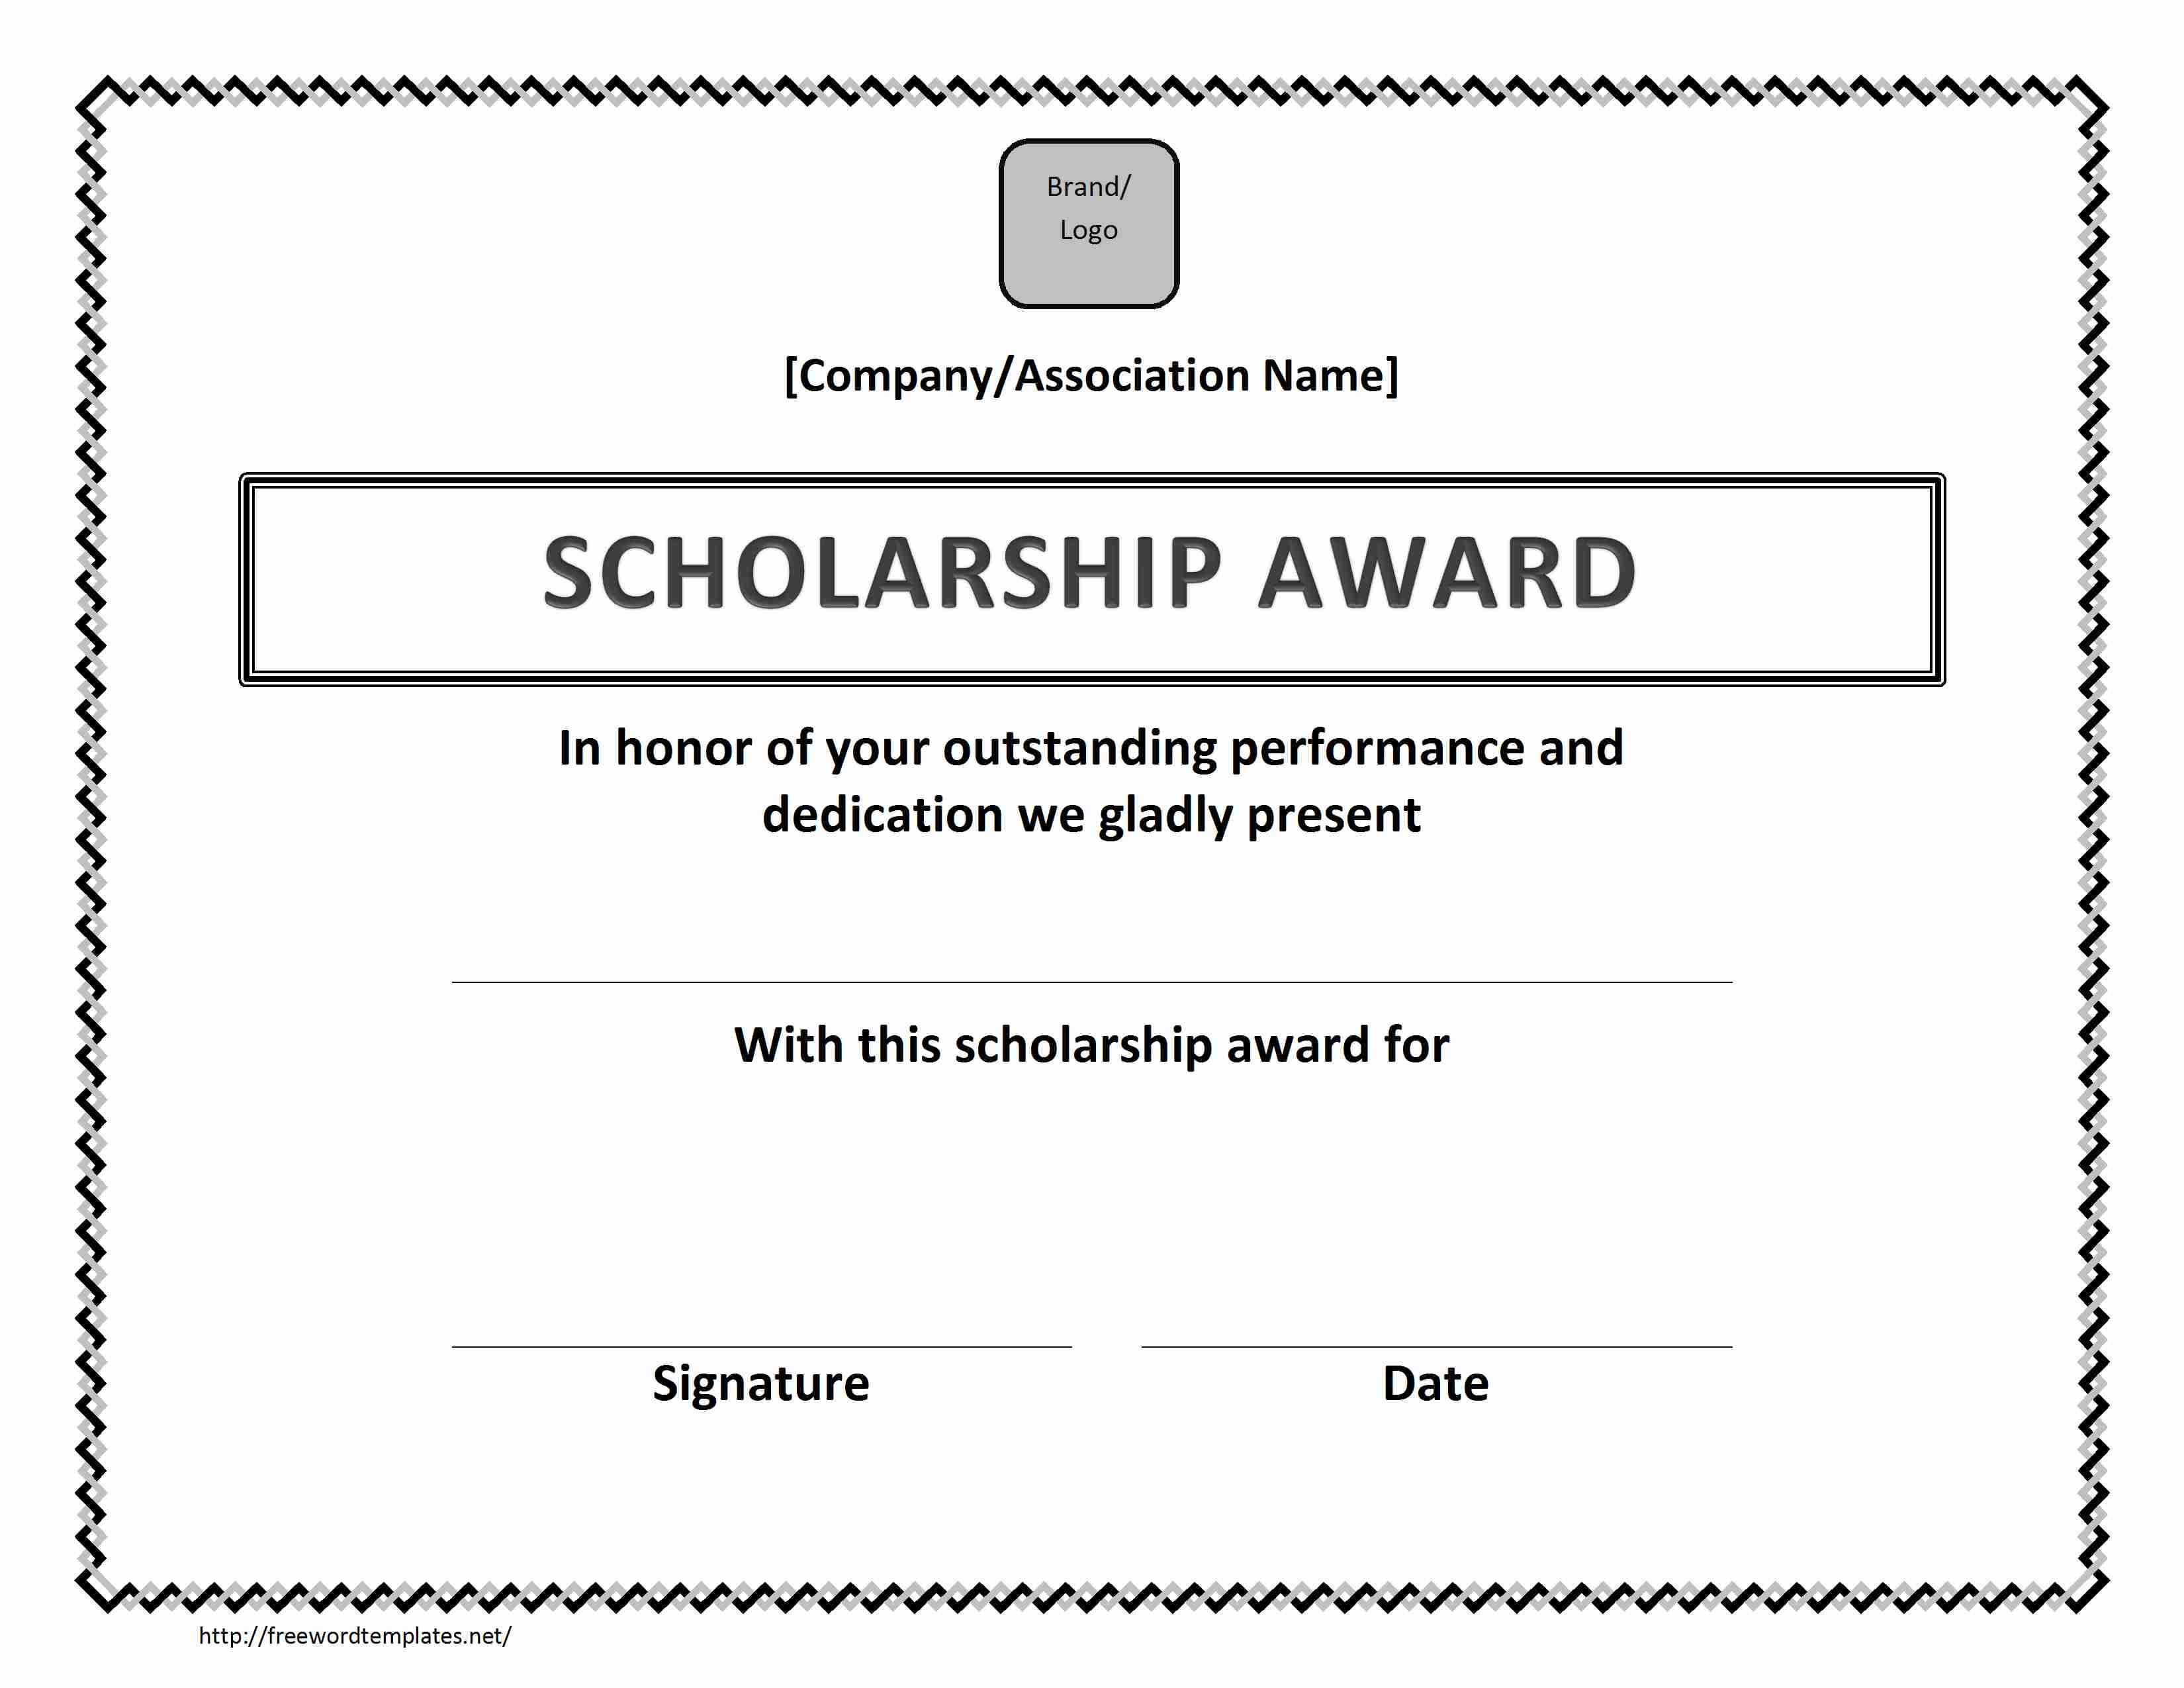 Scholarship Award Certificate With Academic Award Certificate Template